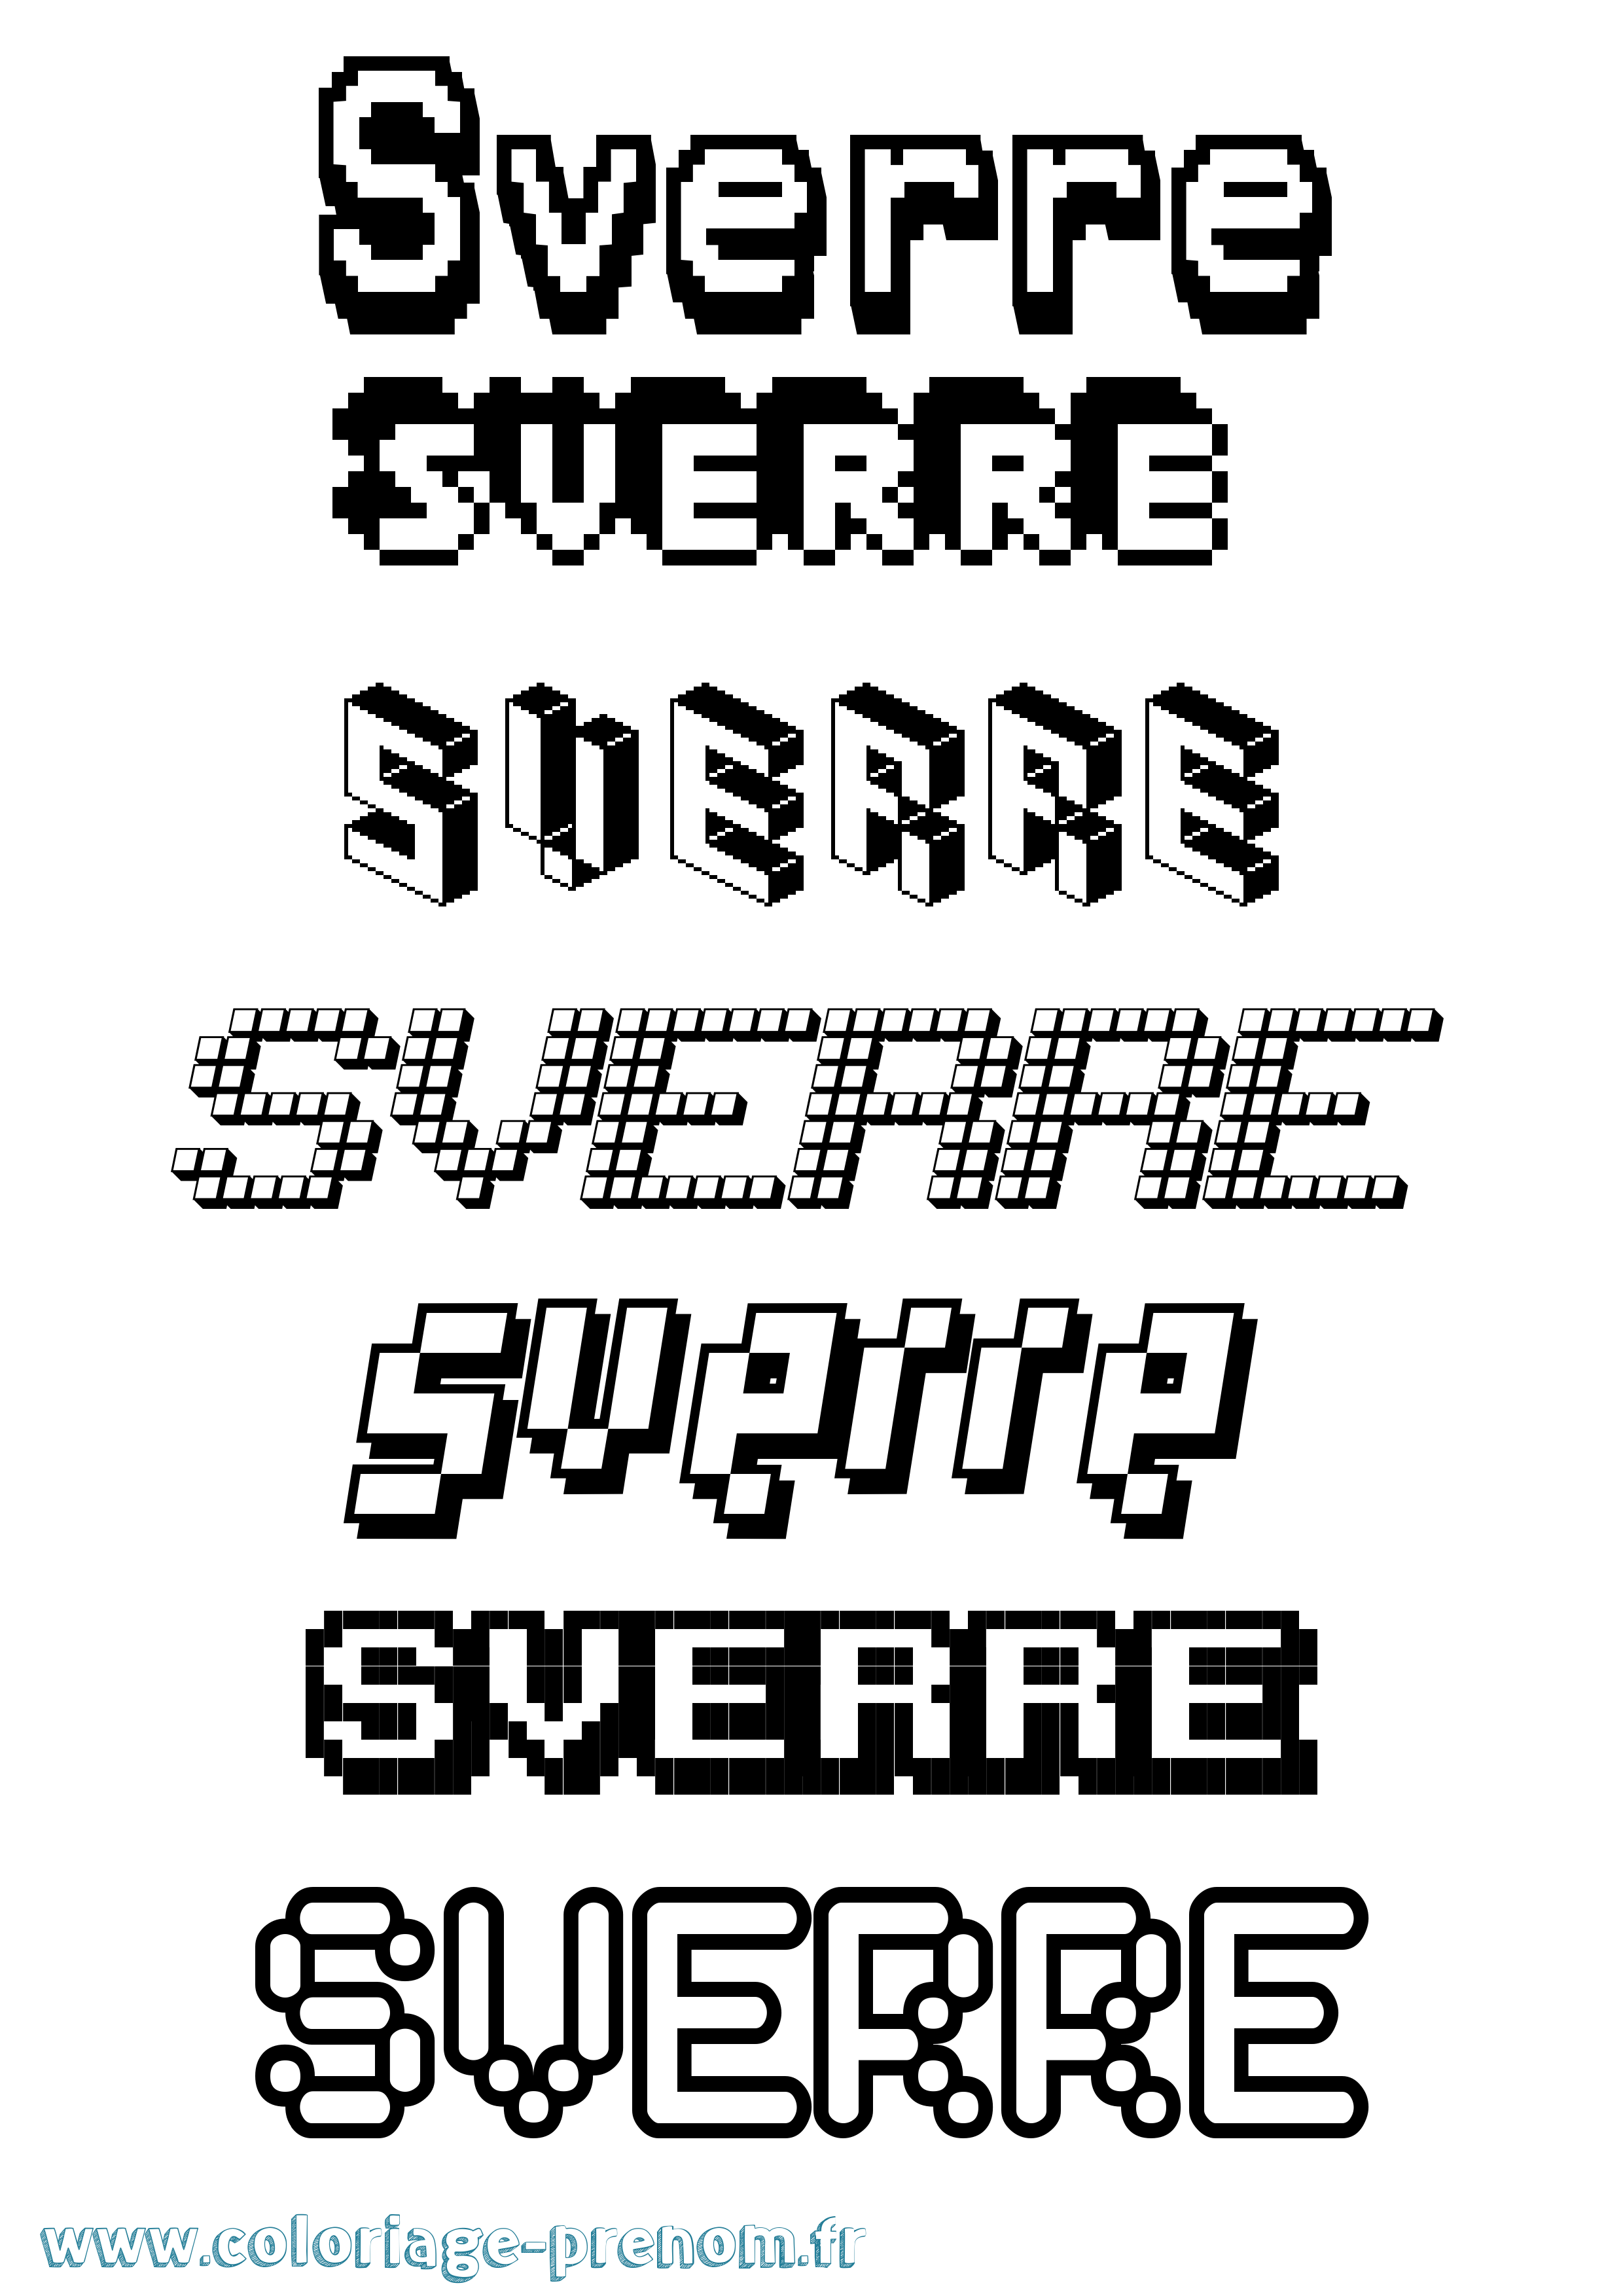 Coloriage prénom Sverre Pixel